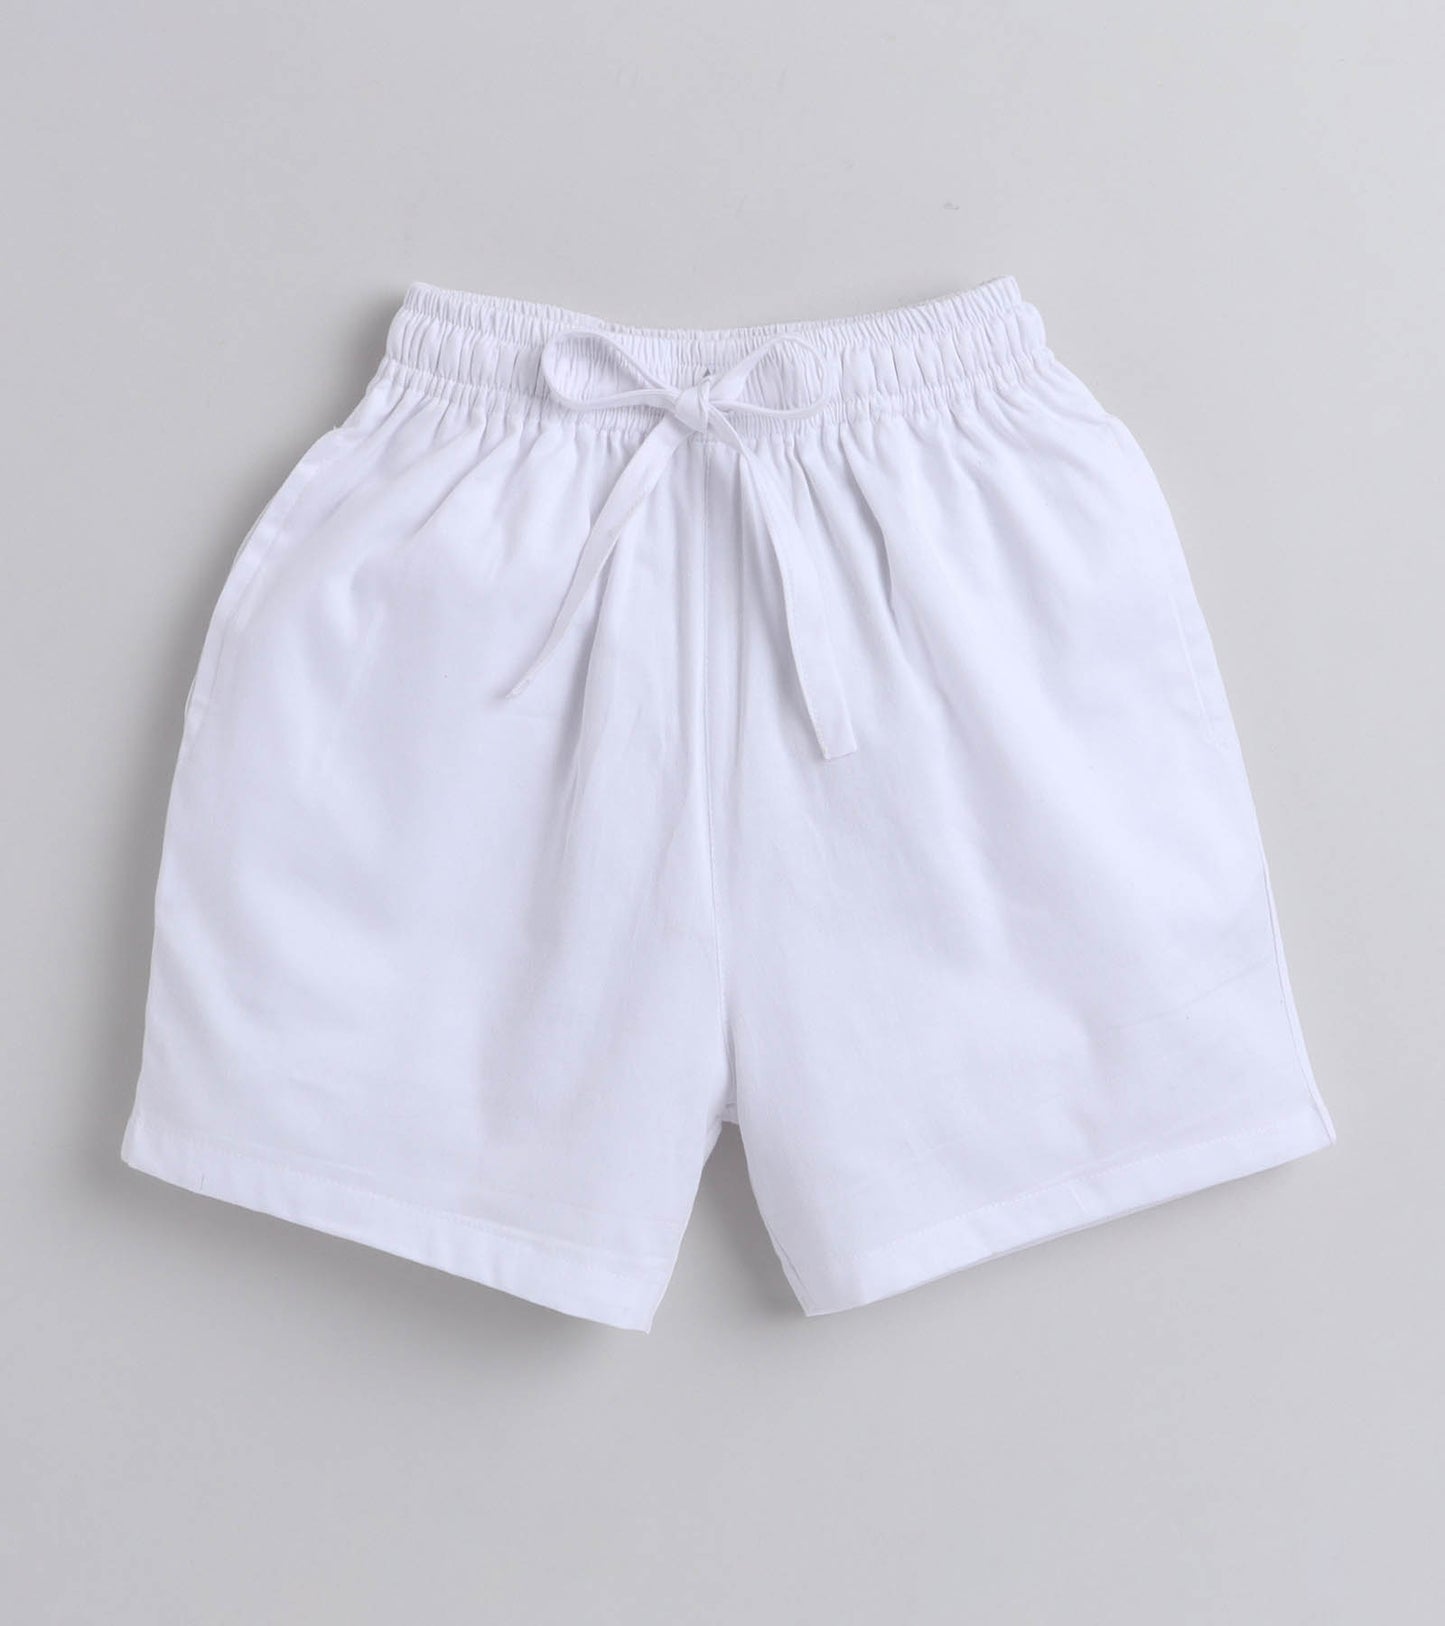 Cherry digi Digital printed Shirt with White solid Shorts